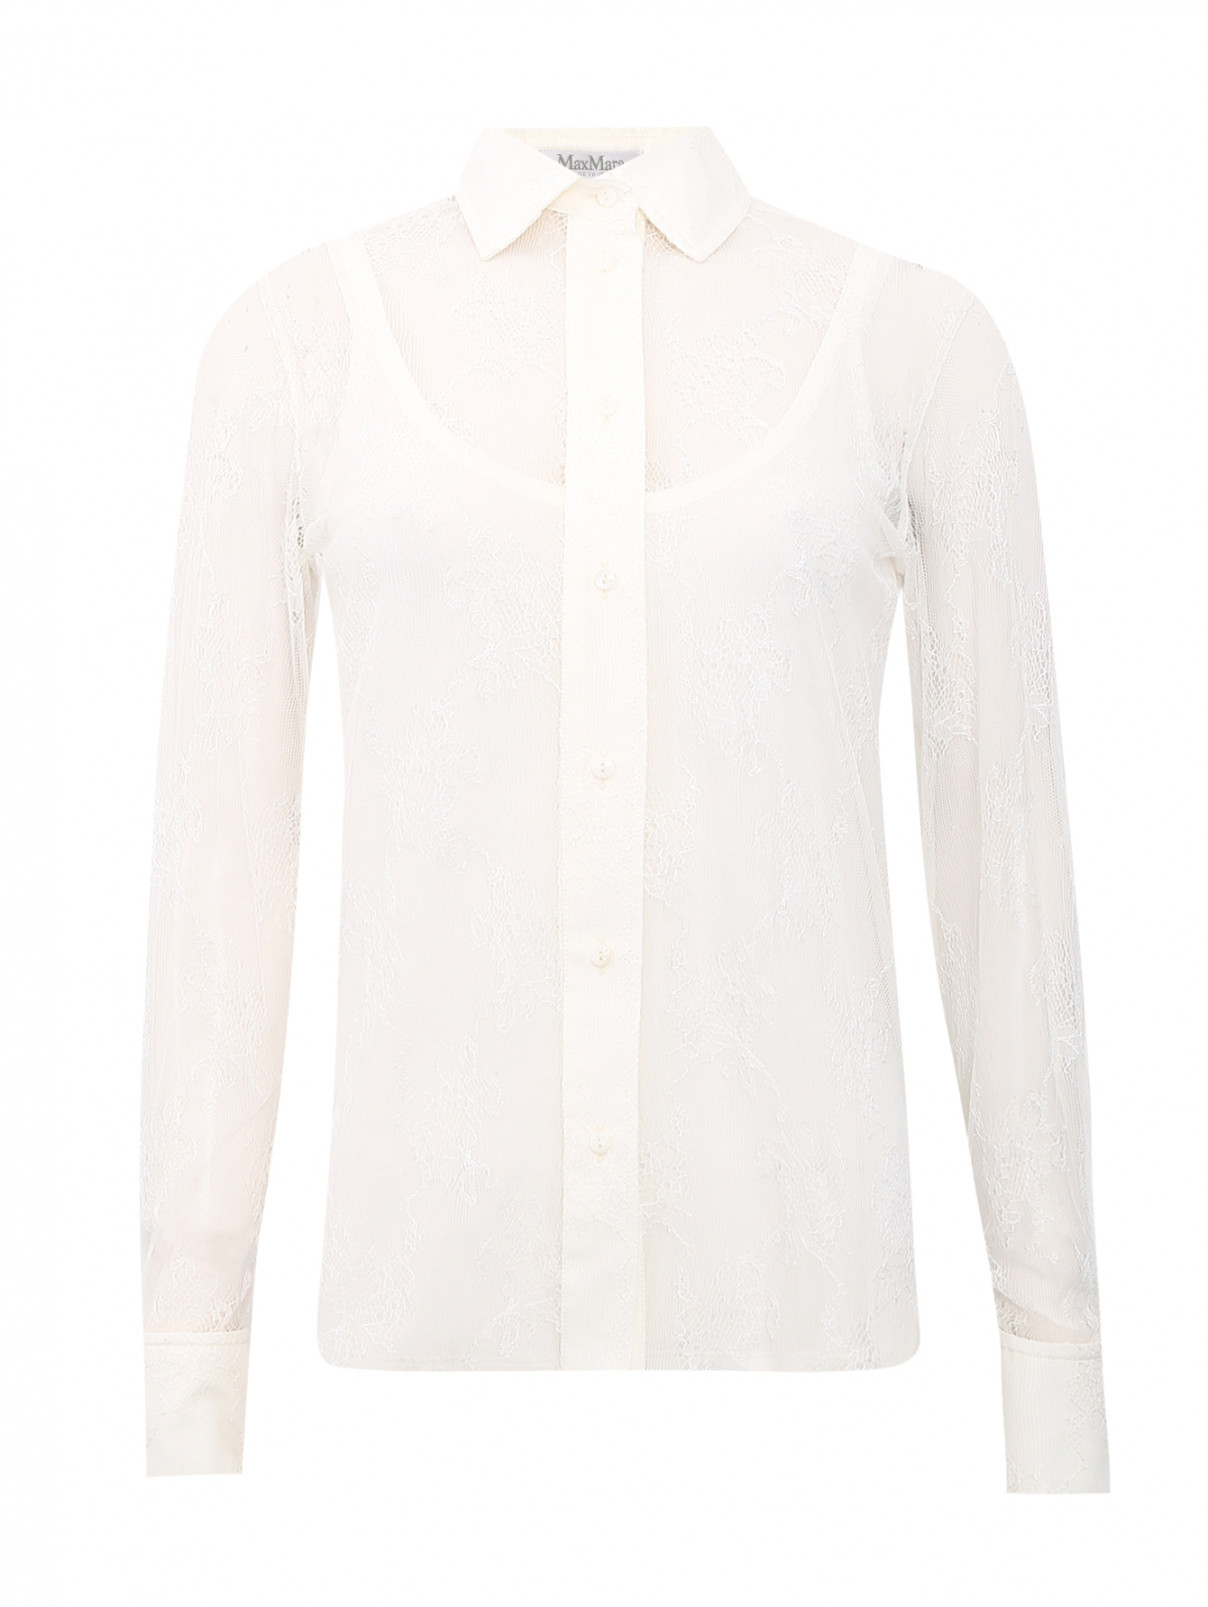 Блуза из кружева Max Mara  –  Общий вид  – Цвет:  Белый